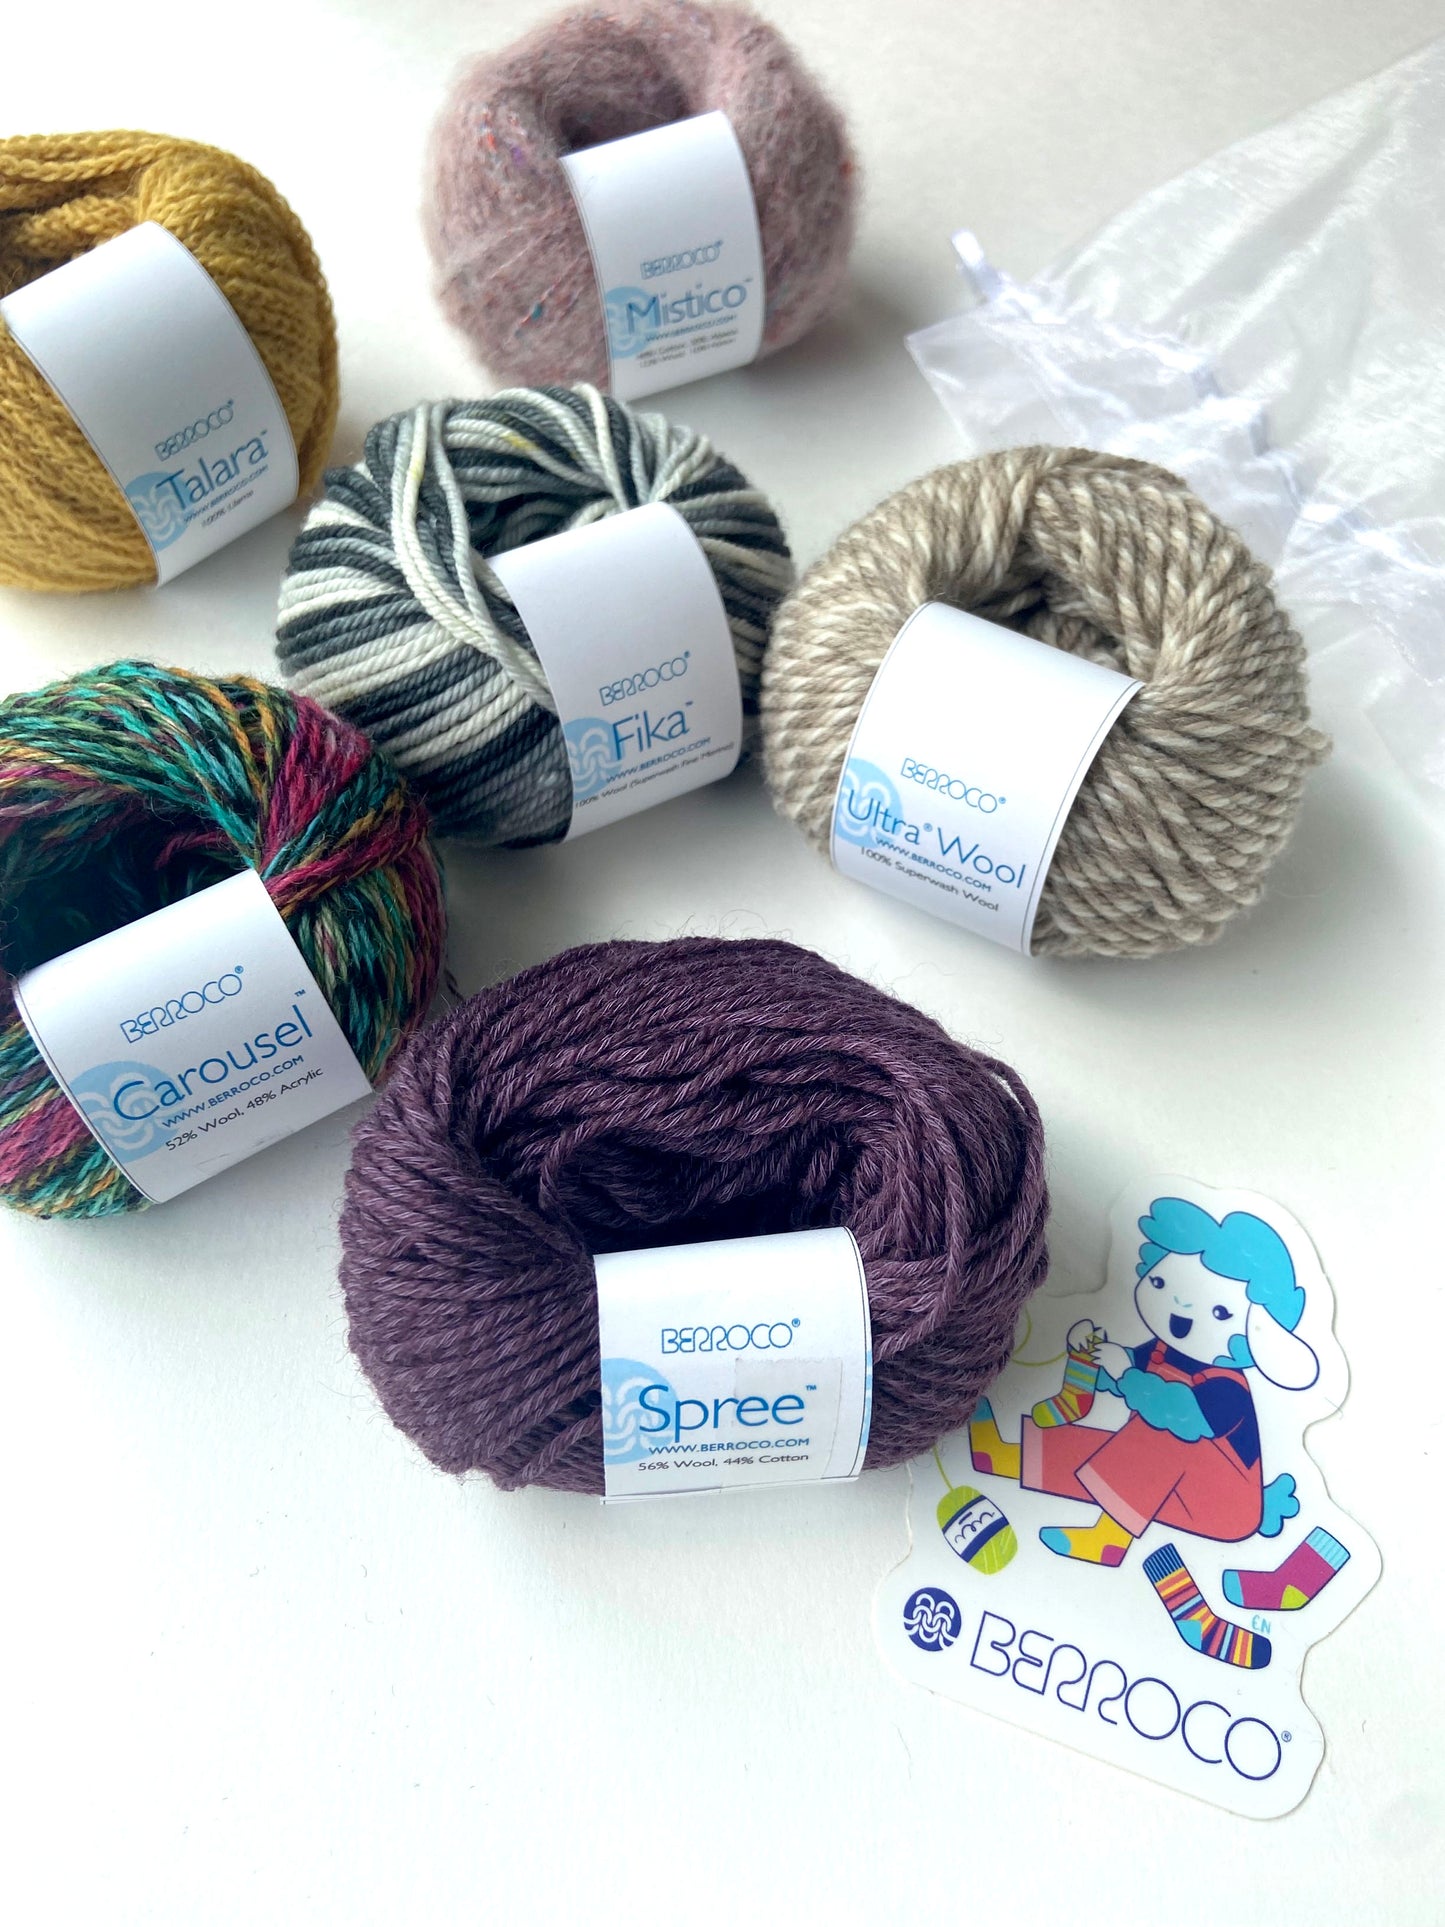 Yarn Tasting Kit from Berroco